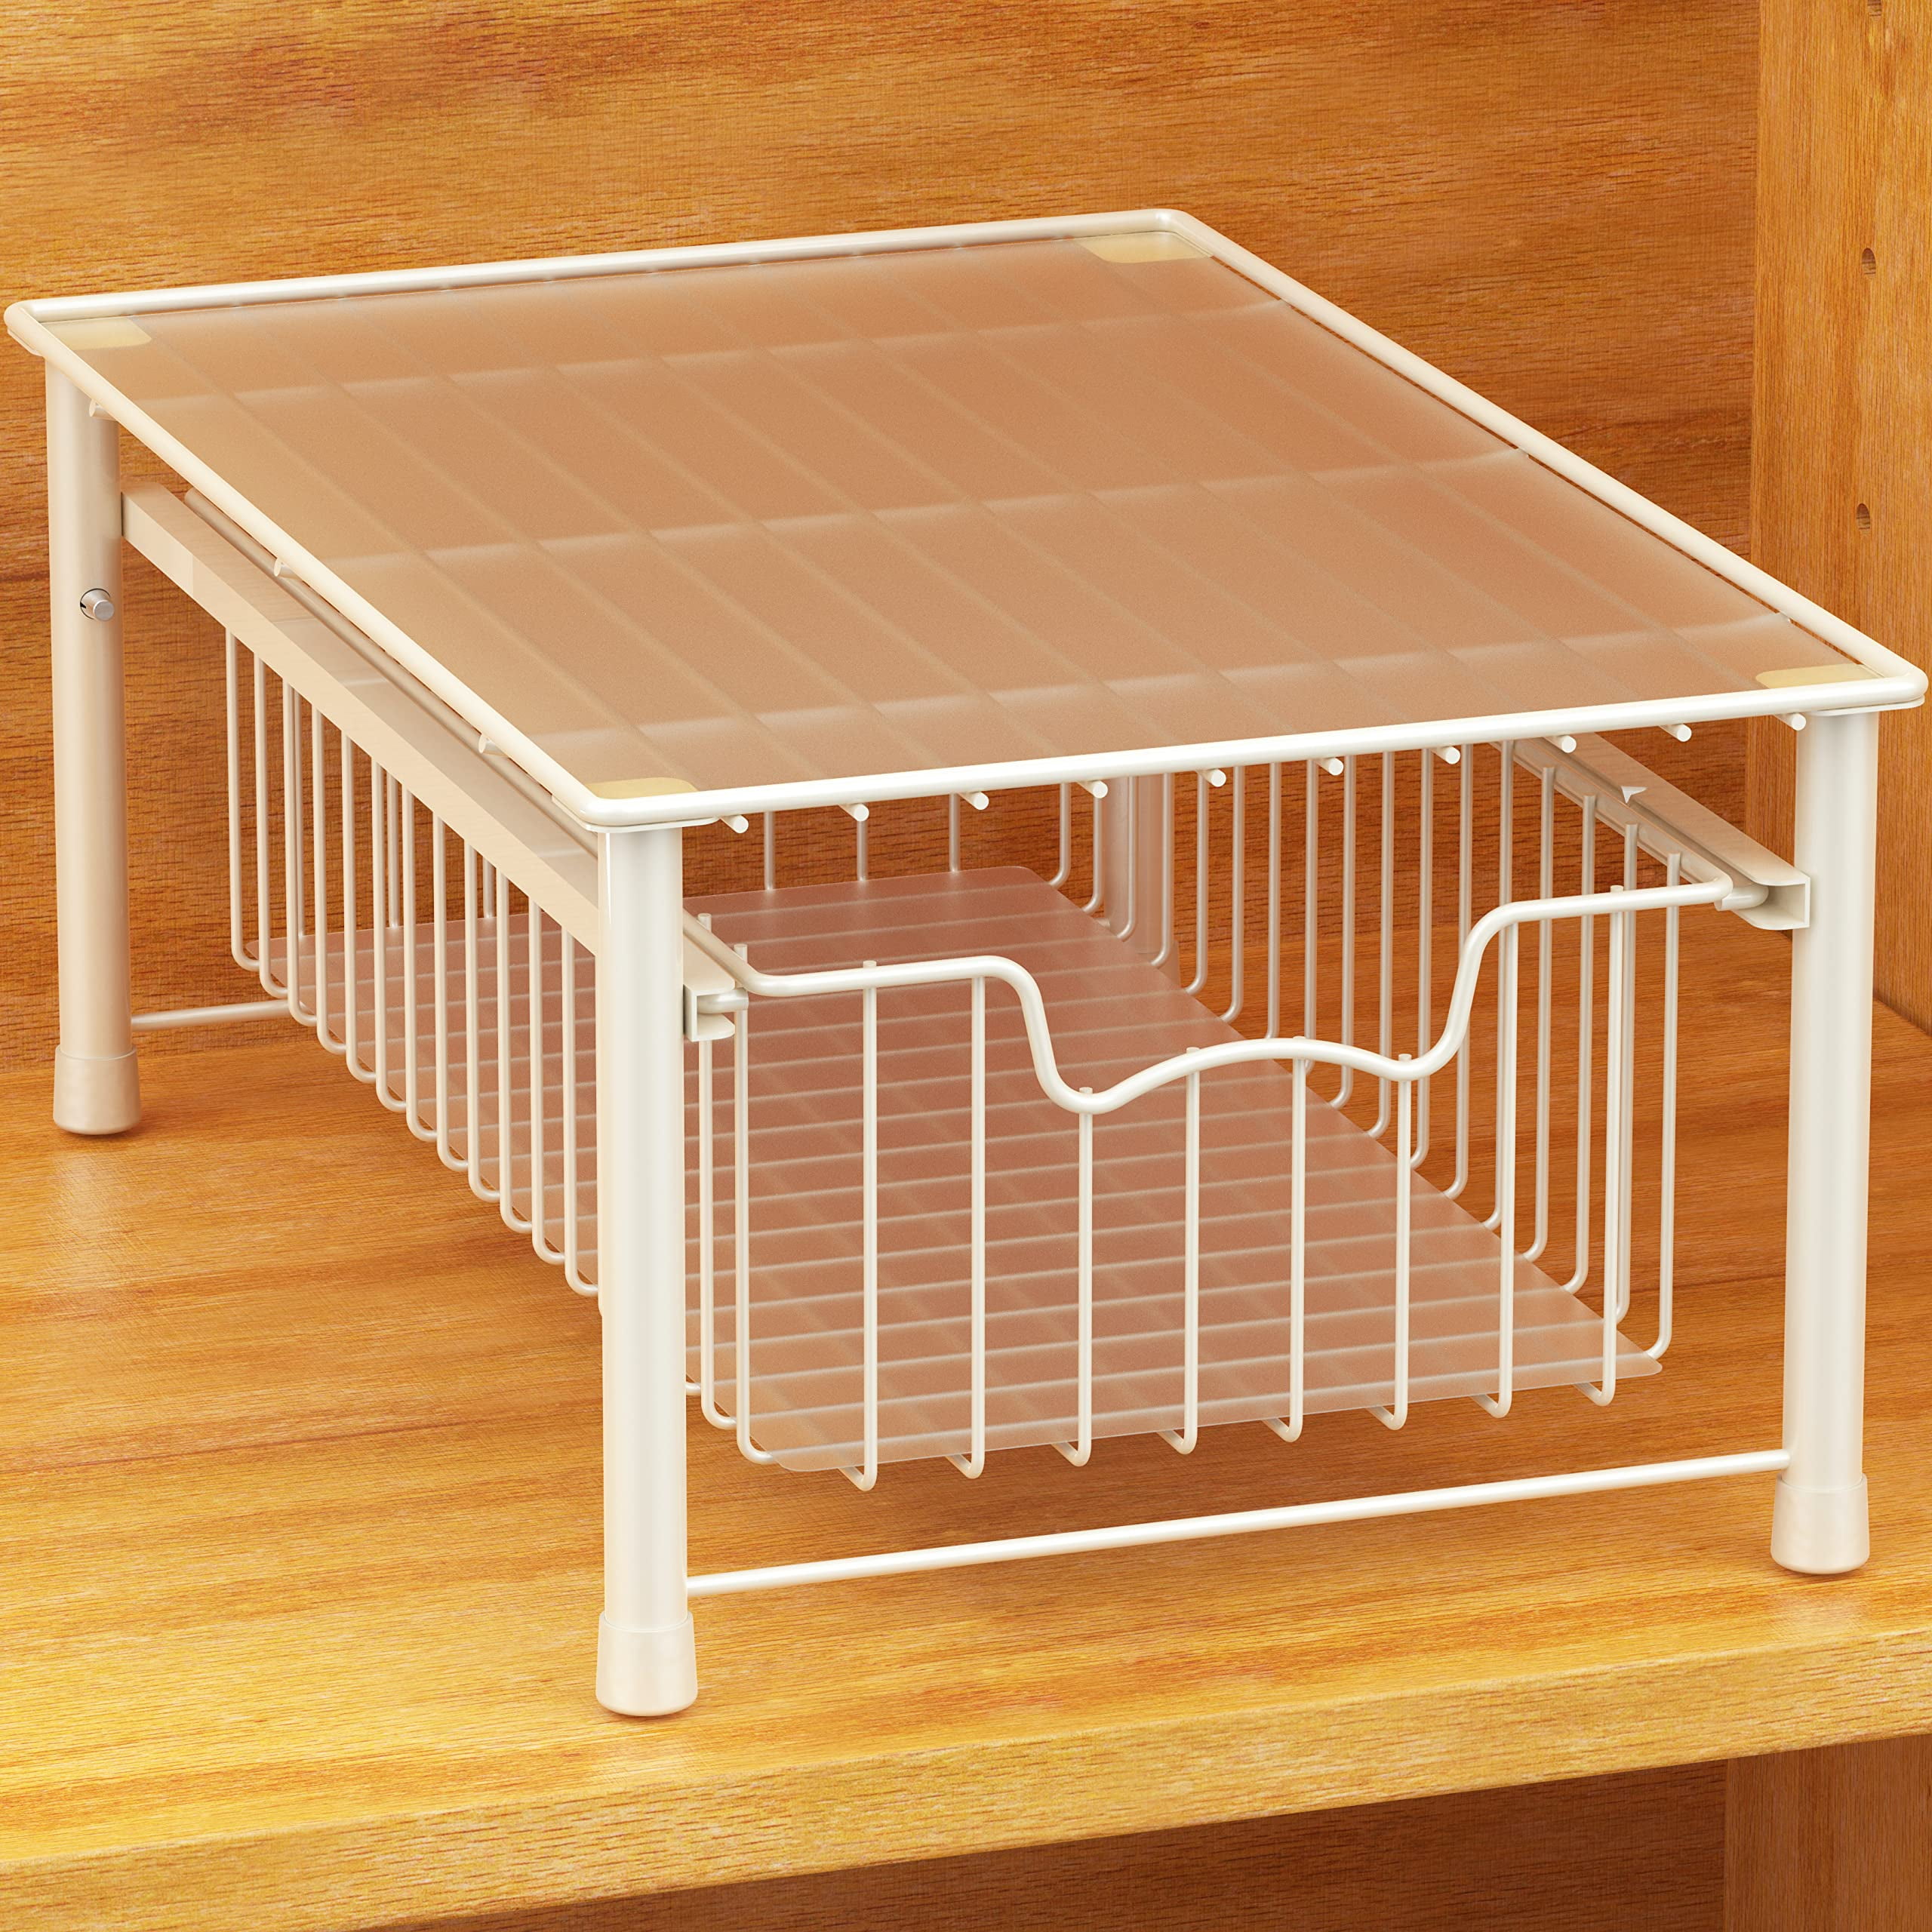 Simple Houseware SimpleHouseware Stackable Under Sink Cabinet Sliding  Basket Organizer Drawer, Chrome